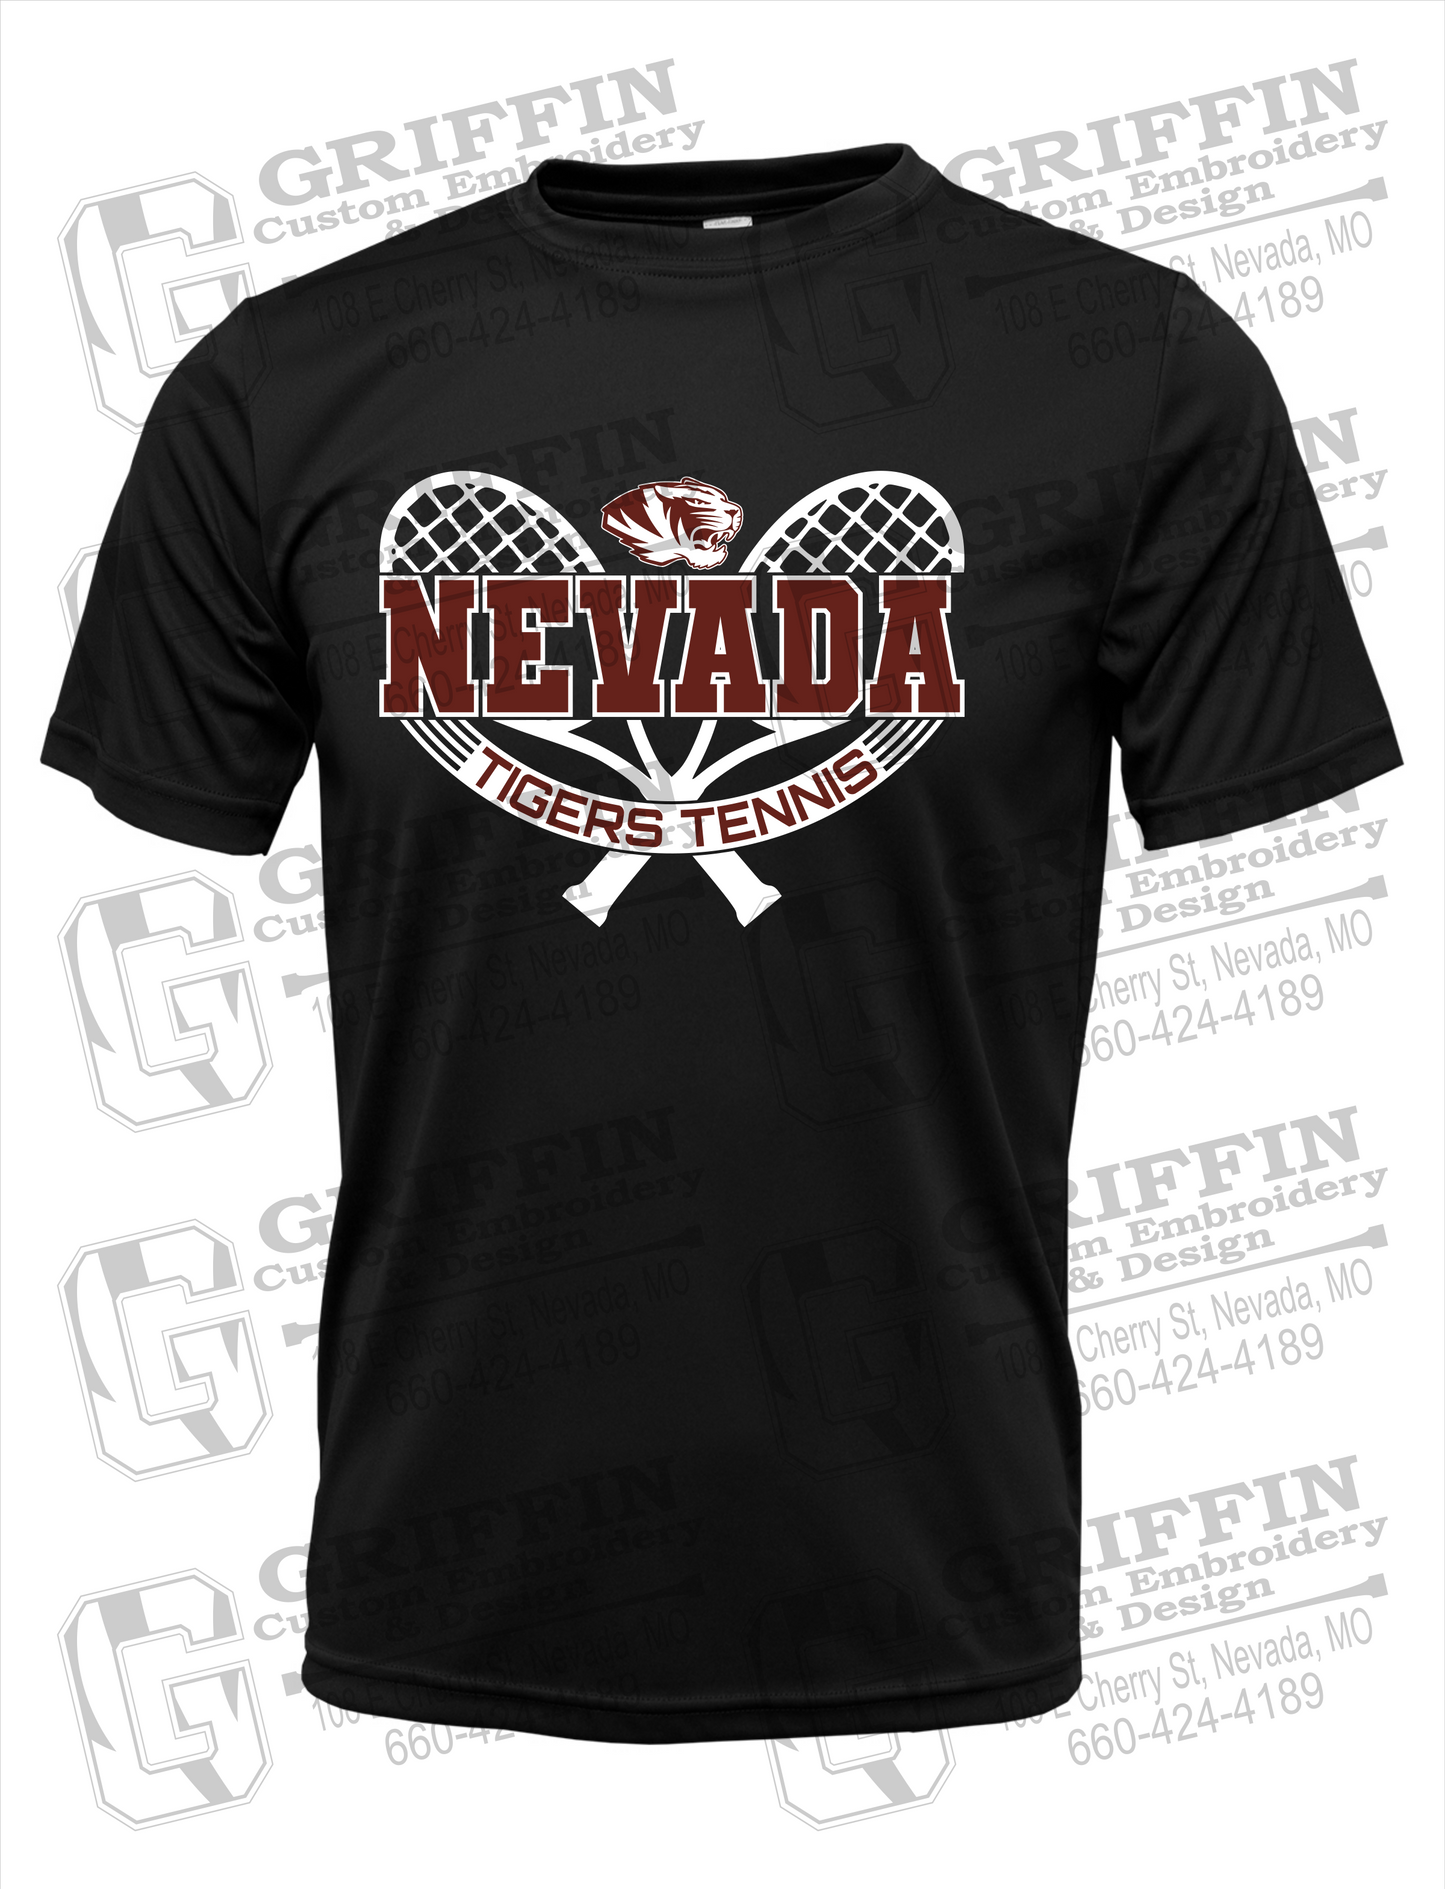 Nevada Tigers 21-Y Dry-Fit T-Shirt - Tennis